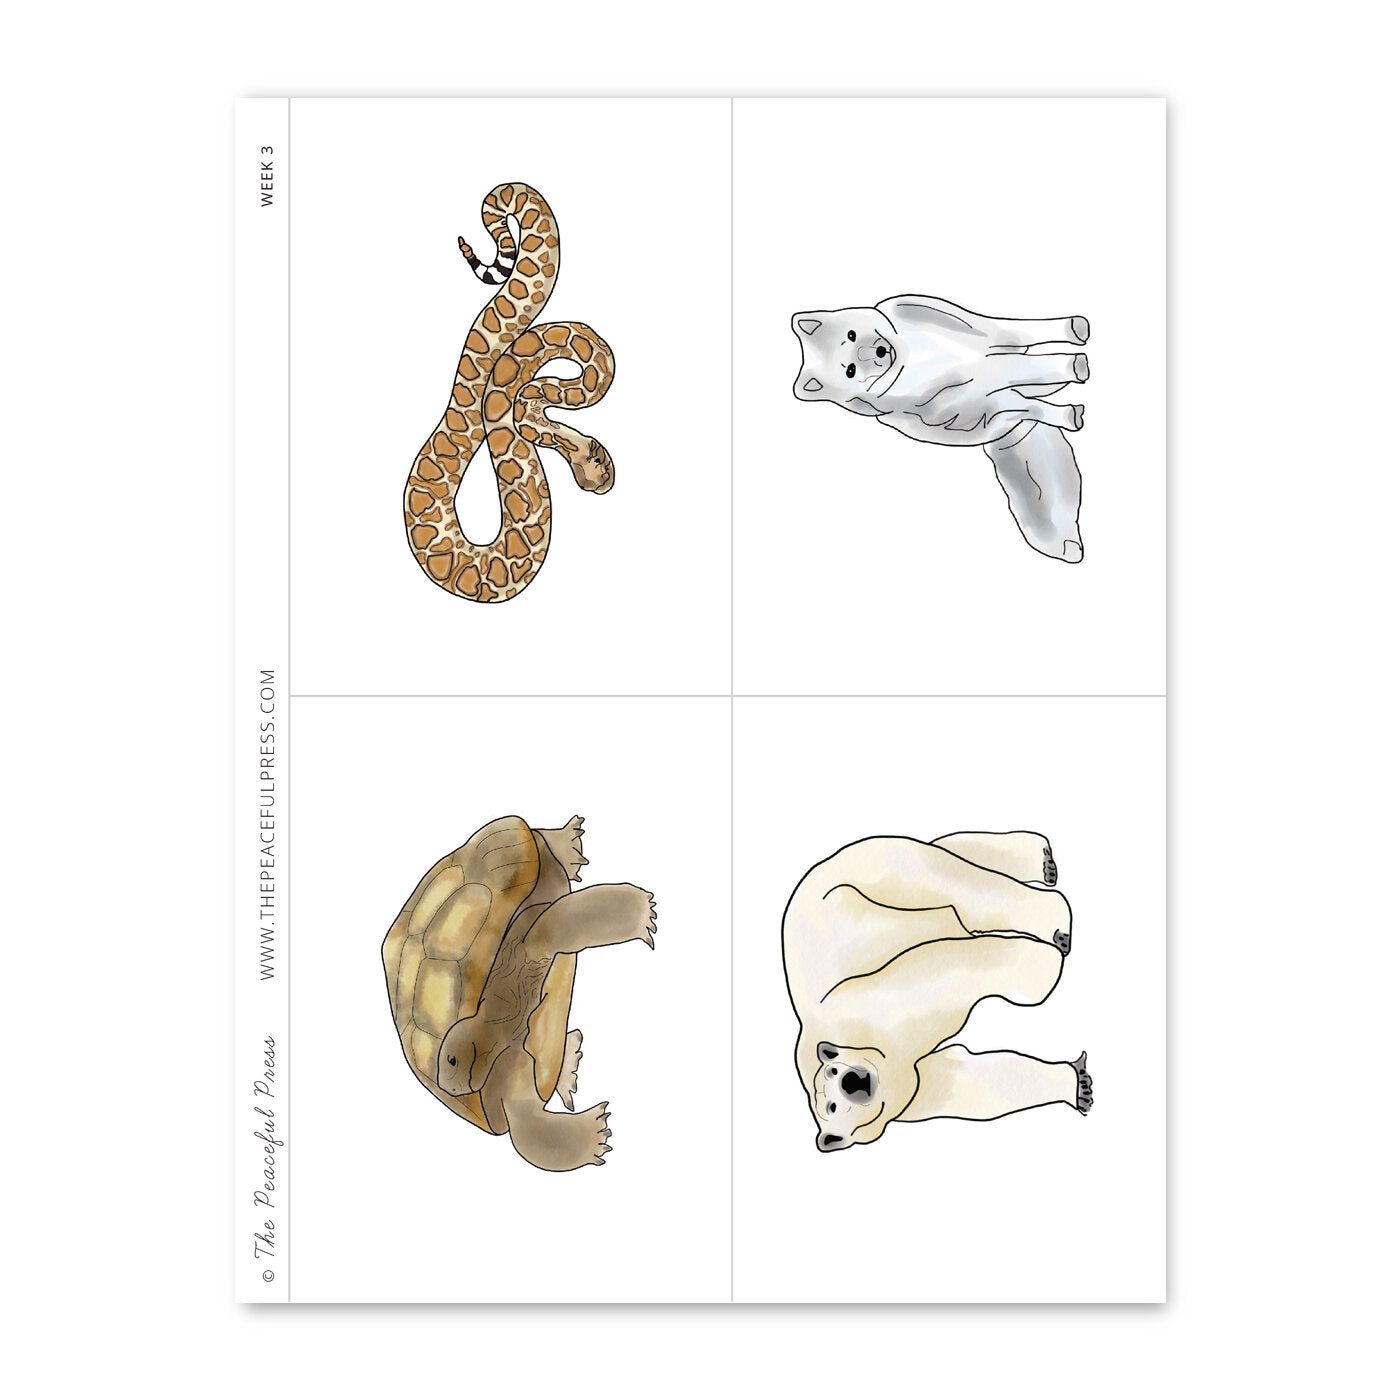 Homeschool Kindergarten Desert Guide Animal Cards featuring an arctic fox, a polar bear, a tortoise, and a ratlle snake.